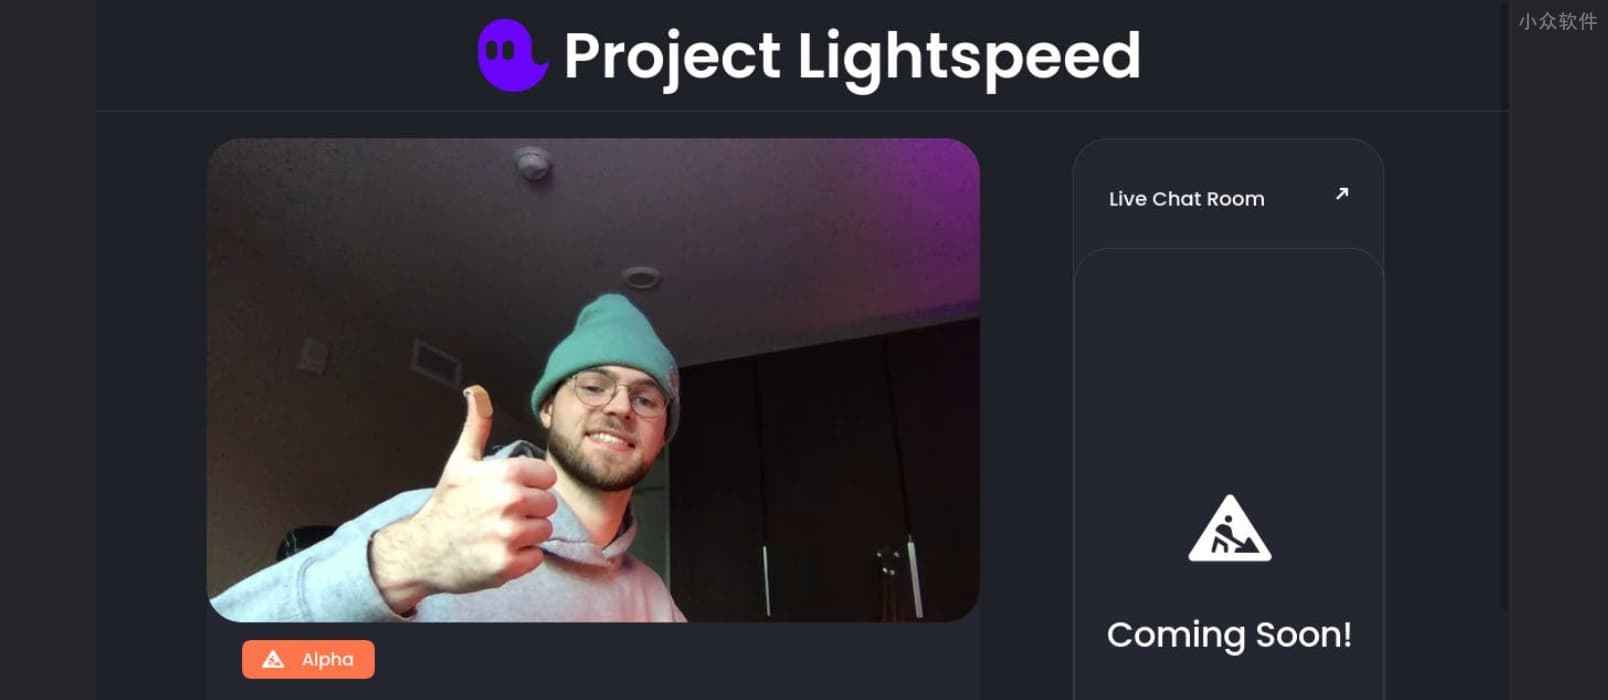 Project Lightspeed - 任何人都能部署的开源亚秒级延迟直播平台 1